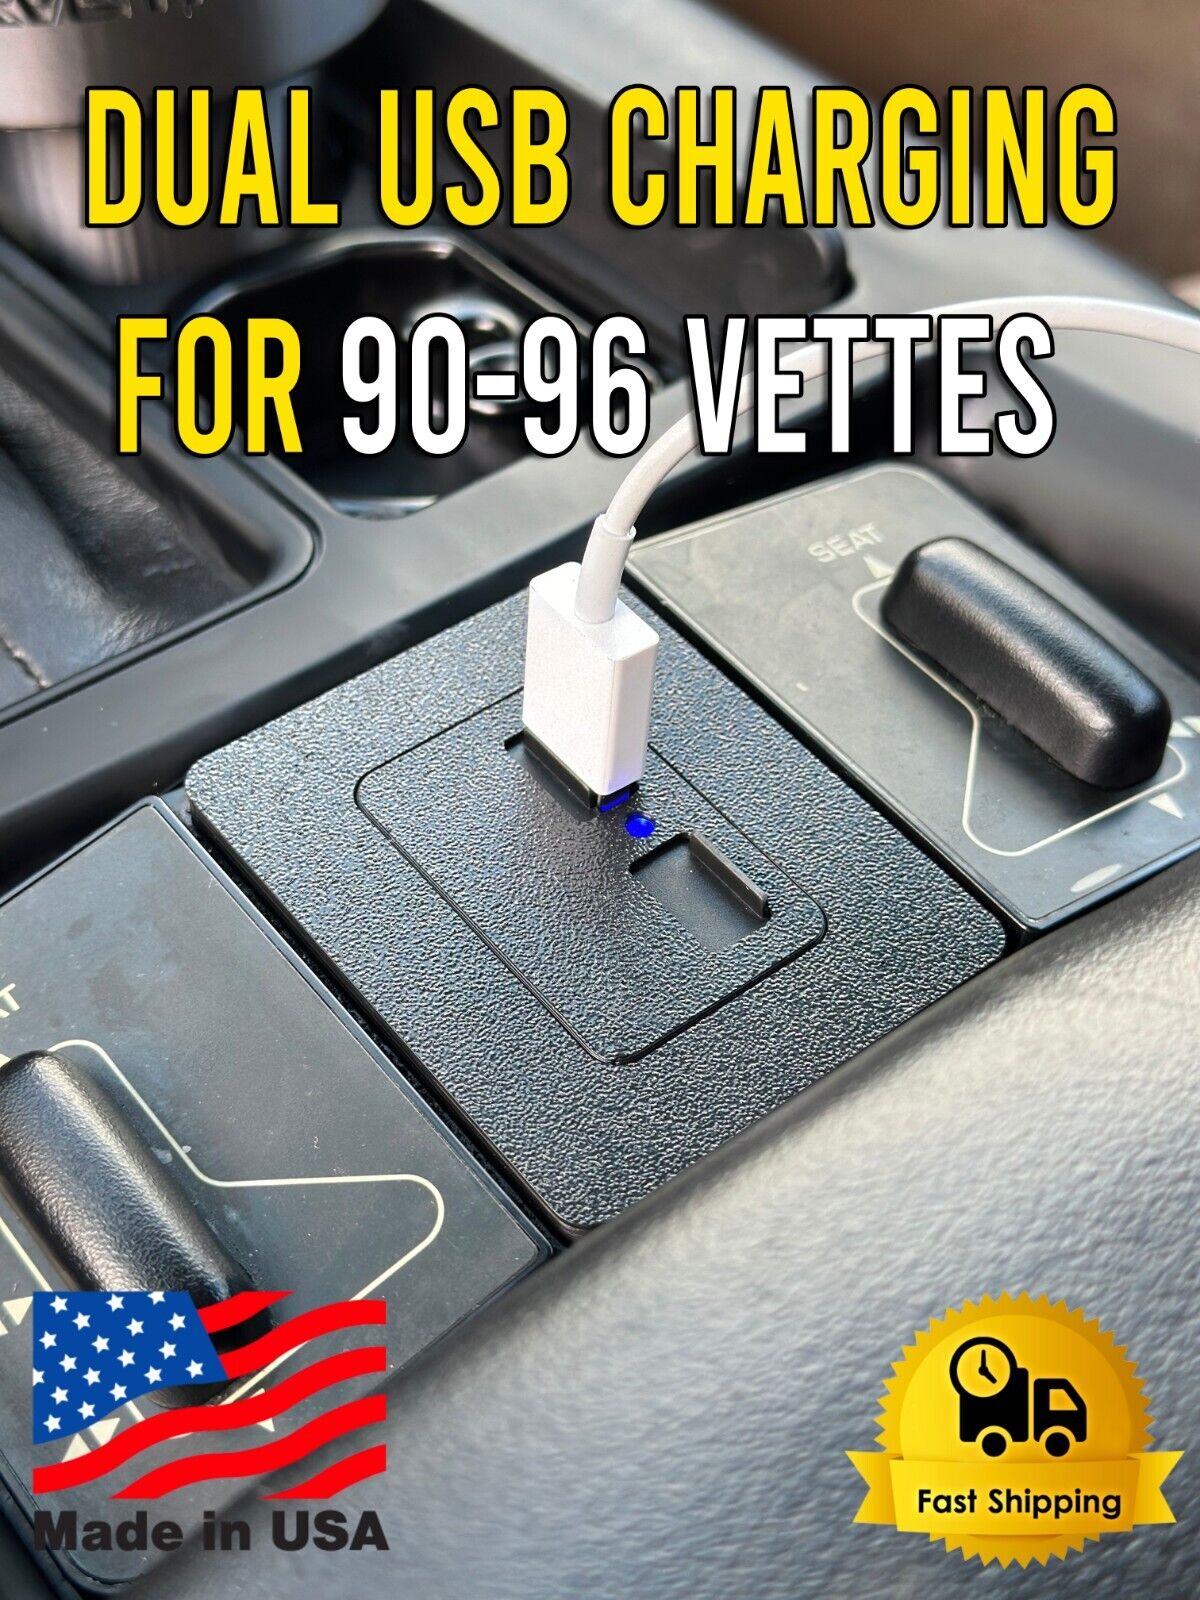 1990-1996 C4 Corvette Dual USB Charging Center Console FX3 Plate Replacement